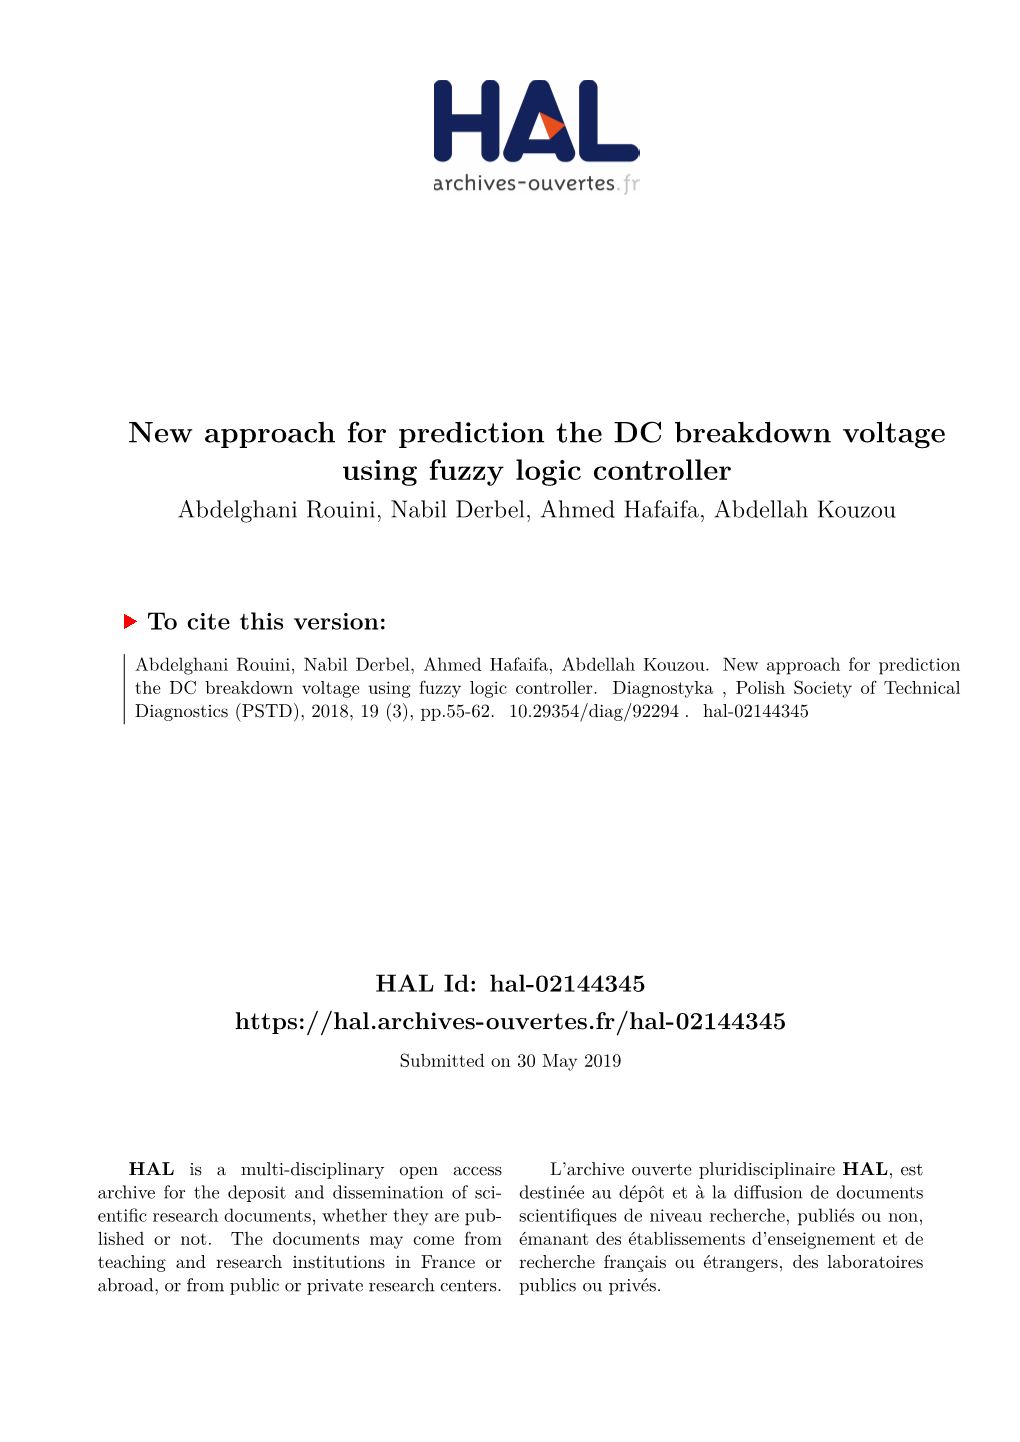 New Approach for Prediction the DC Breakdown Voltage Using Fuzzy Logic Controller Abdelghani Rouini, Nabil Derbel, Ahmed Hafaifa, Abdellah Kouzou